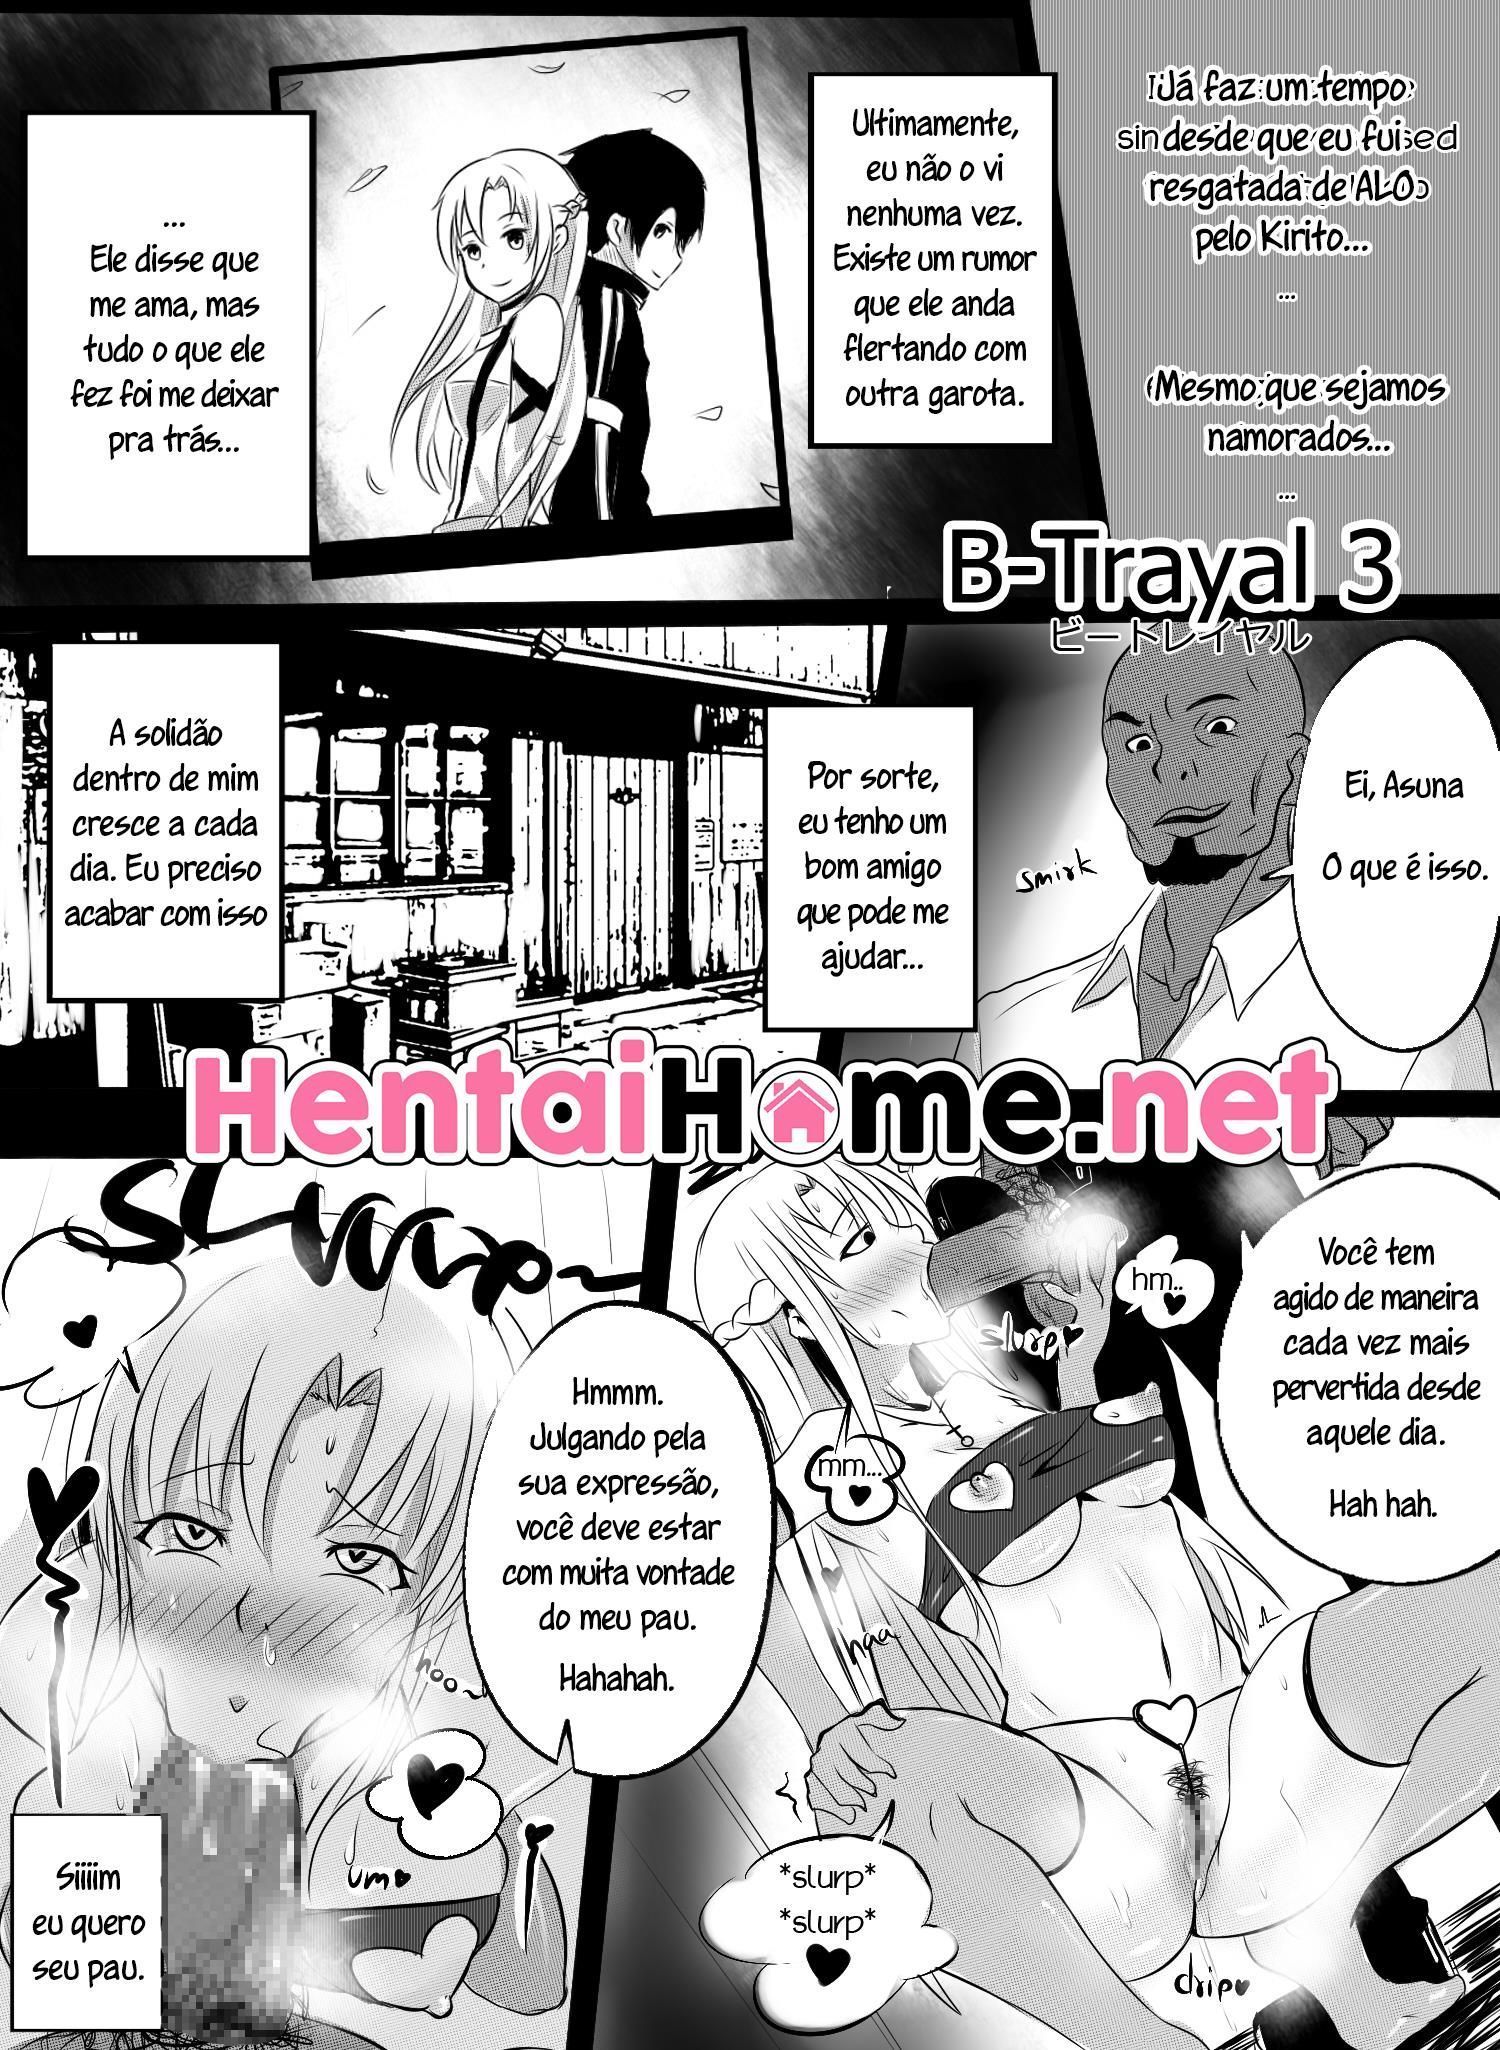 Asuna Hentai - Sword art online hentai: Asuna traindo com um negao - Hentai Brasileiro